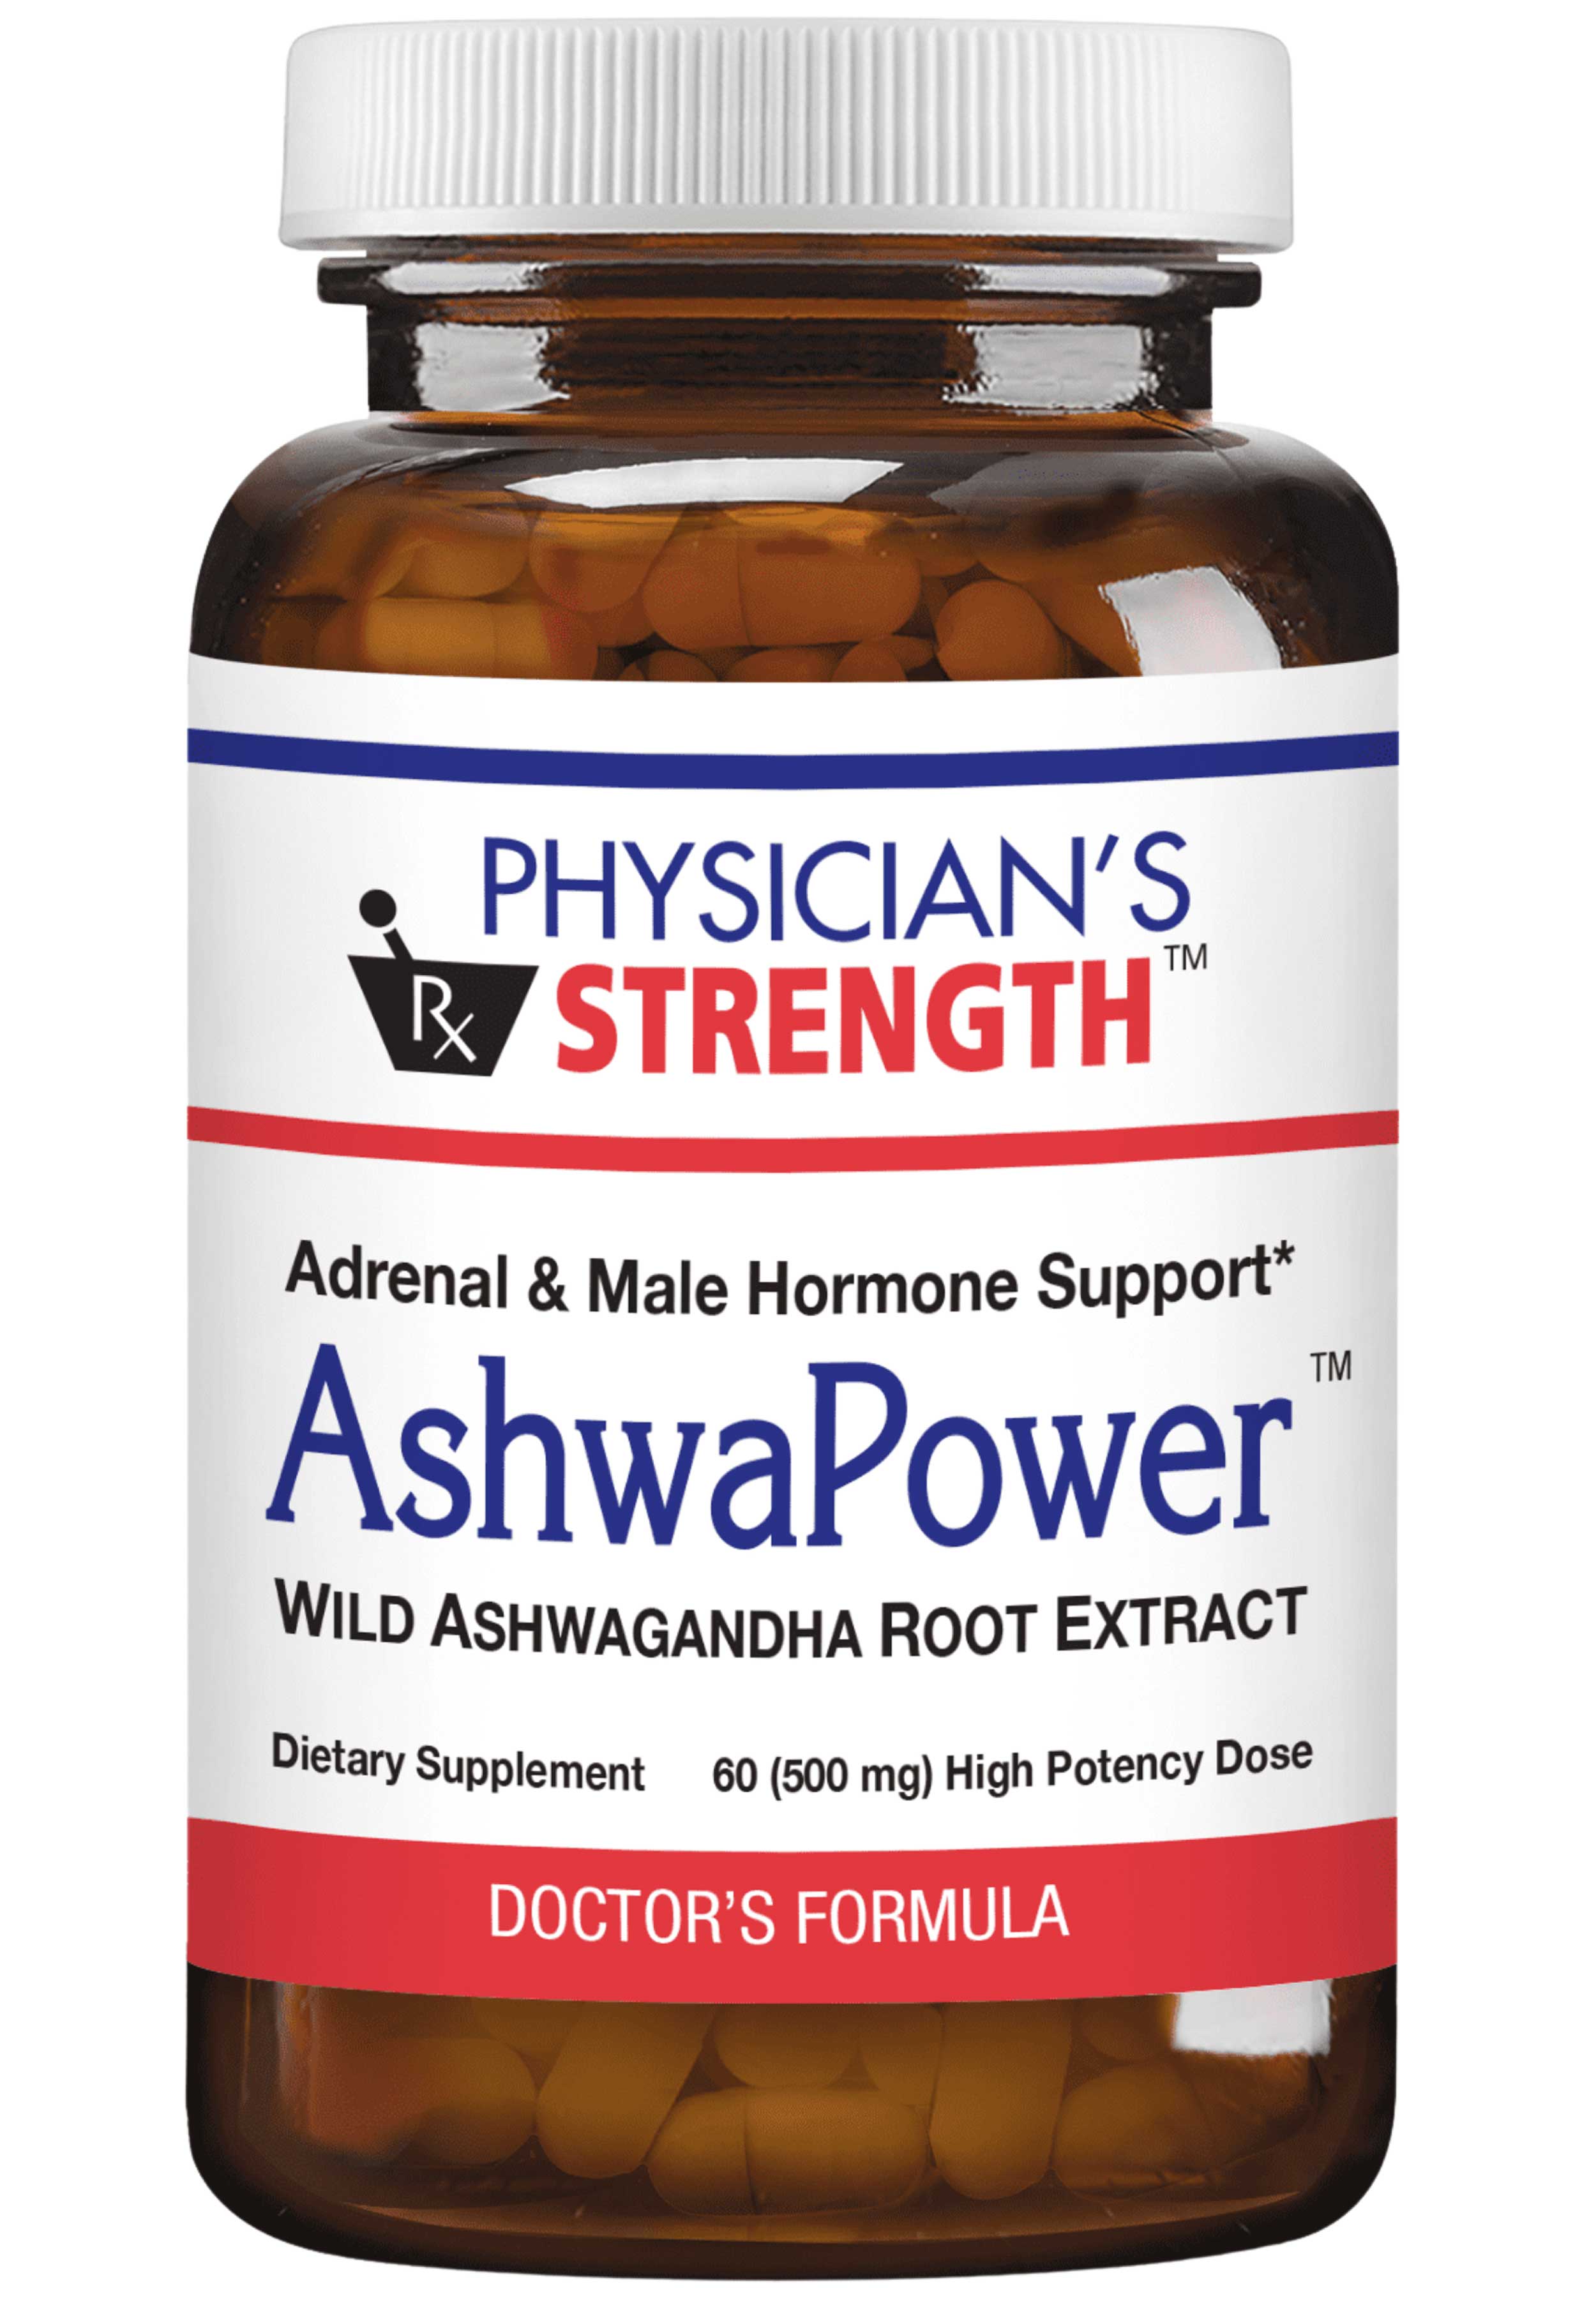 Physician's Strength AshwaPower